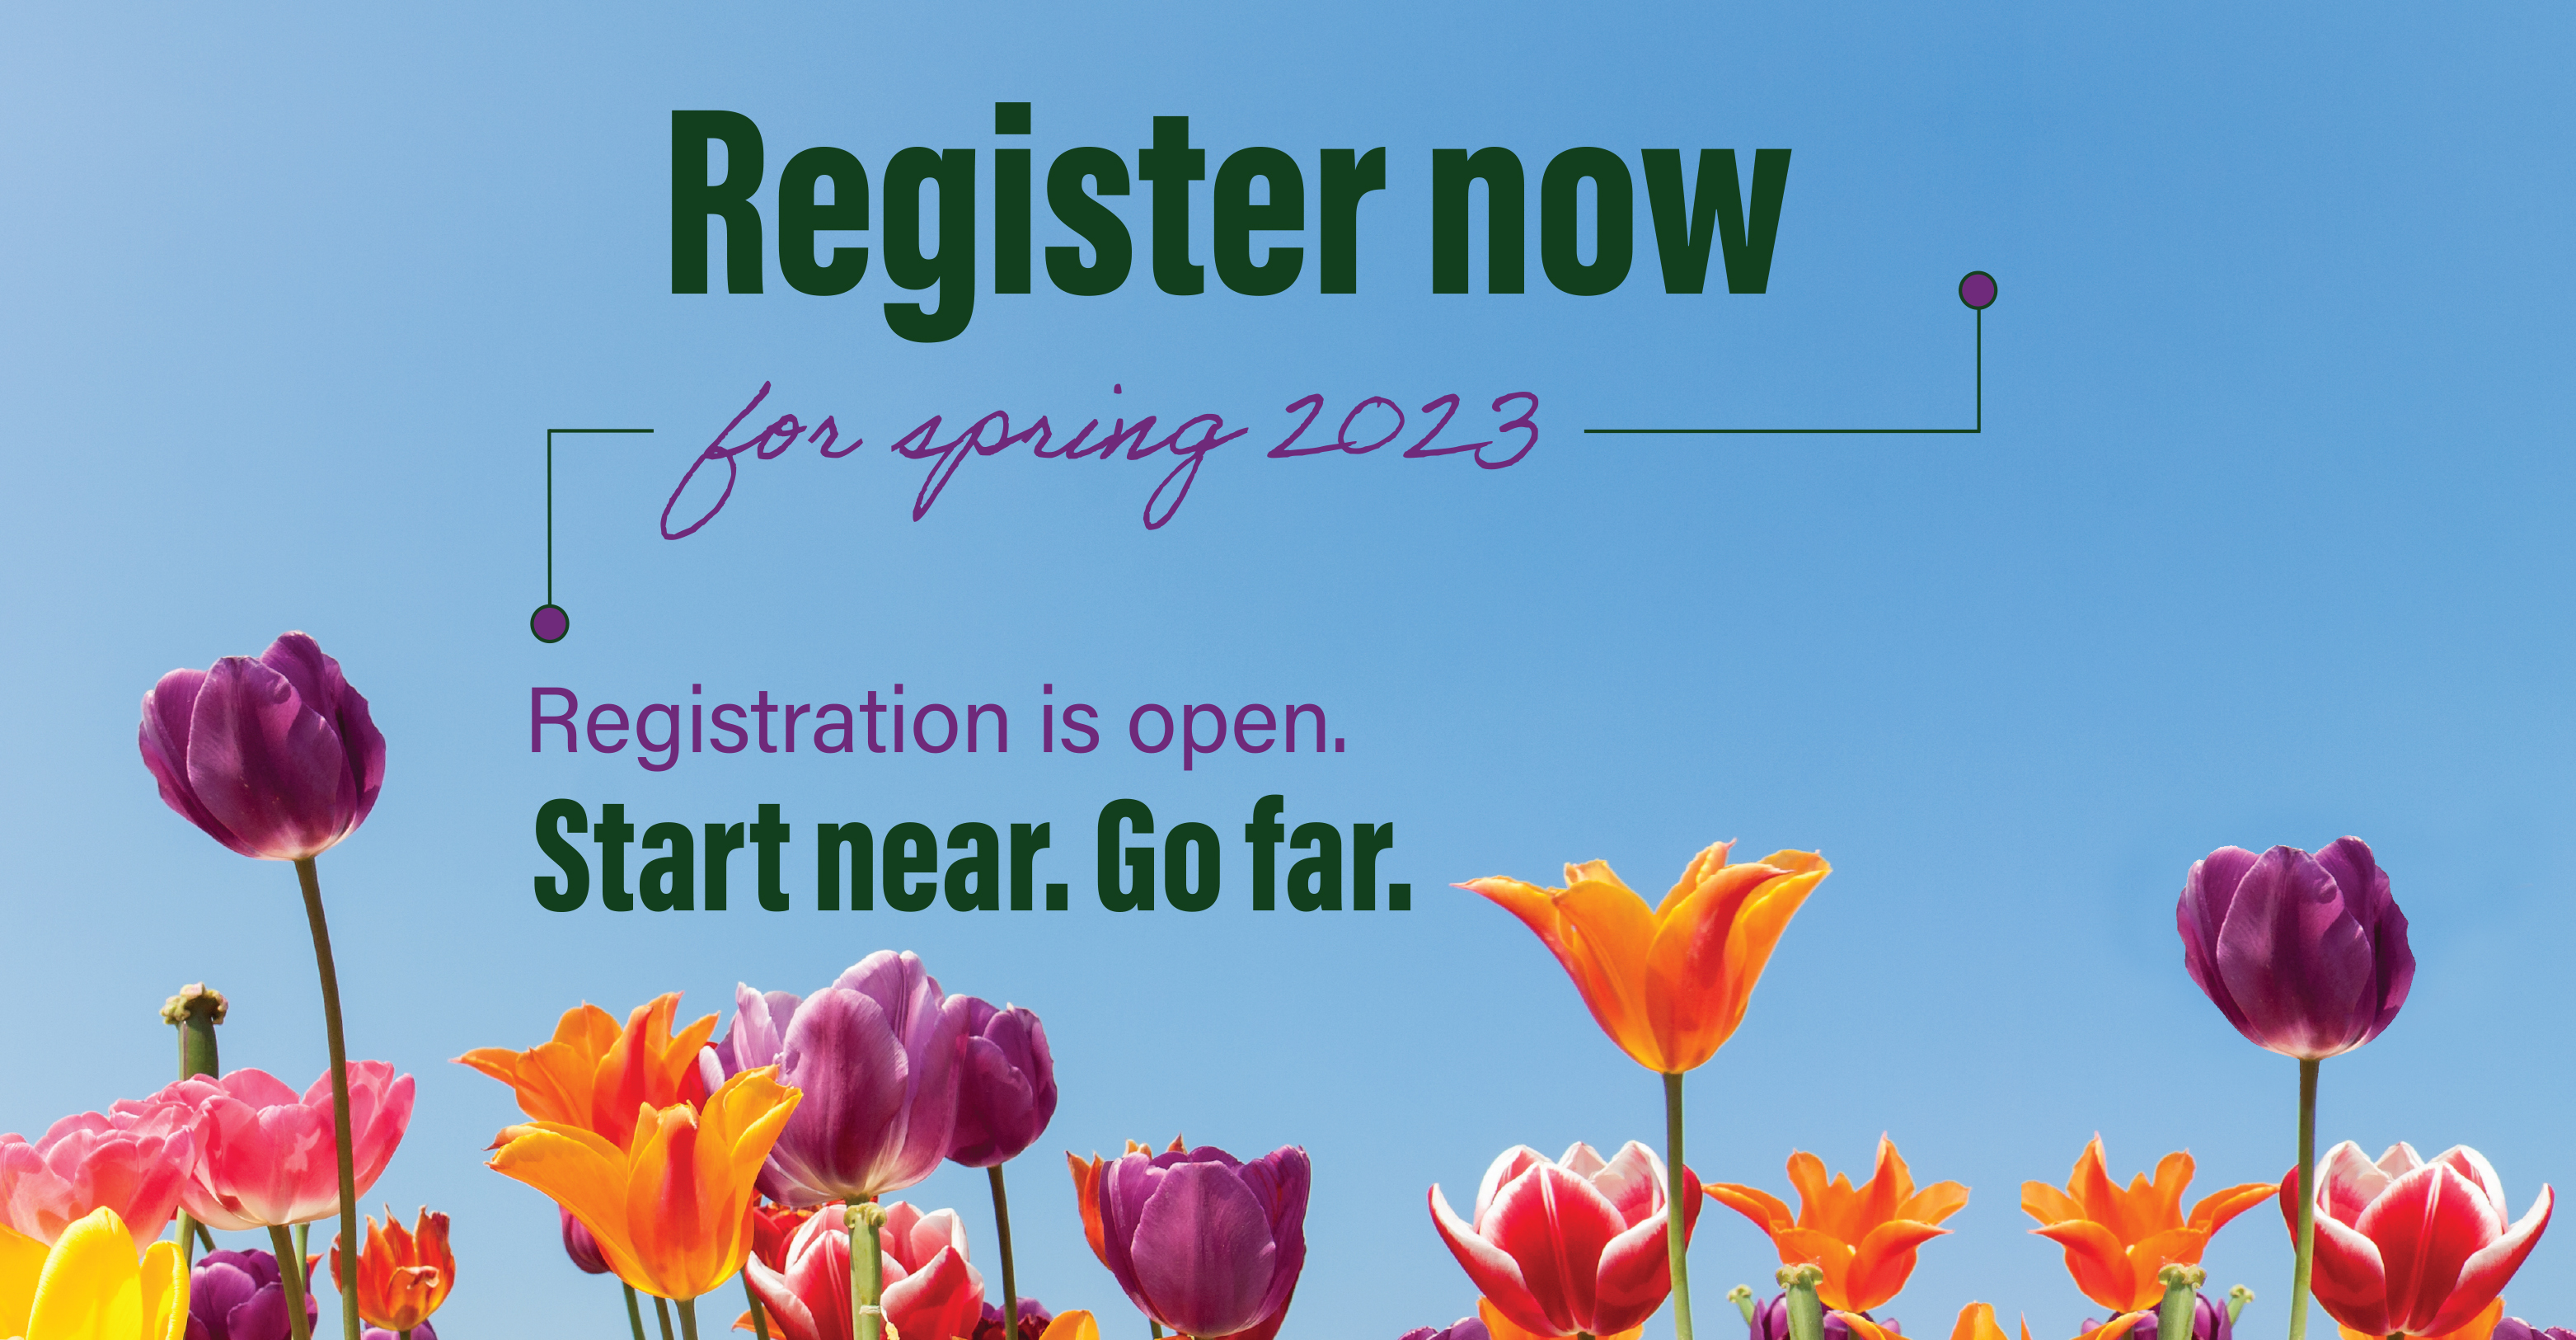 Register Now for Spring 2023